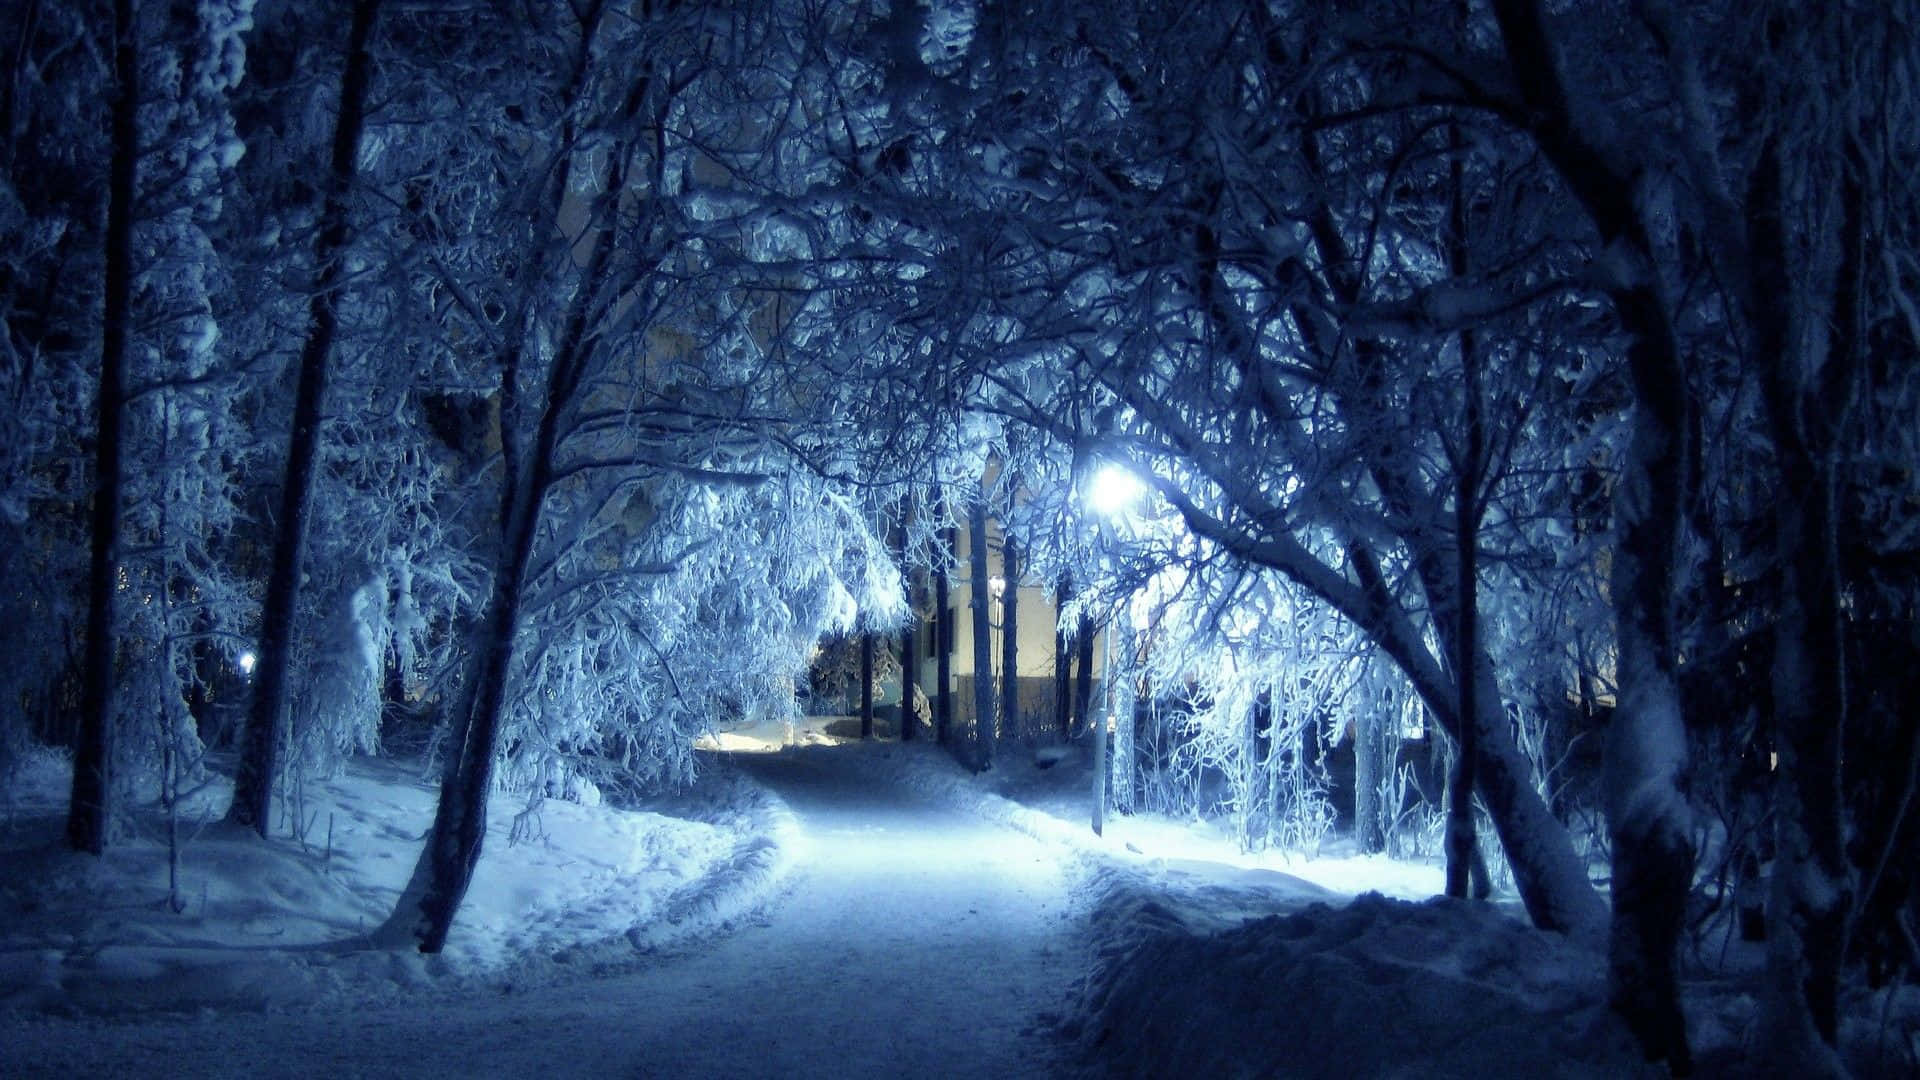 Serene Winter Wonderland Scene